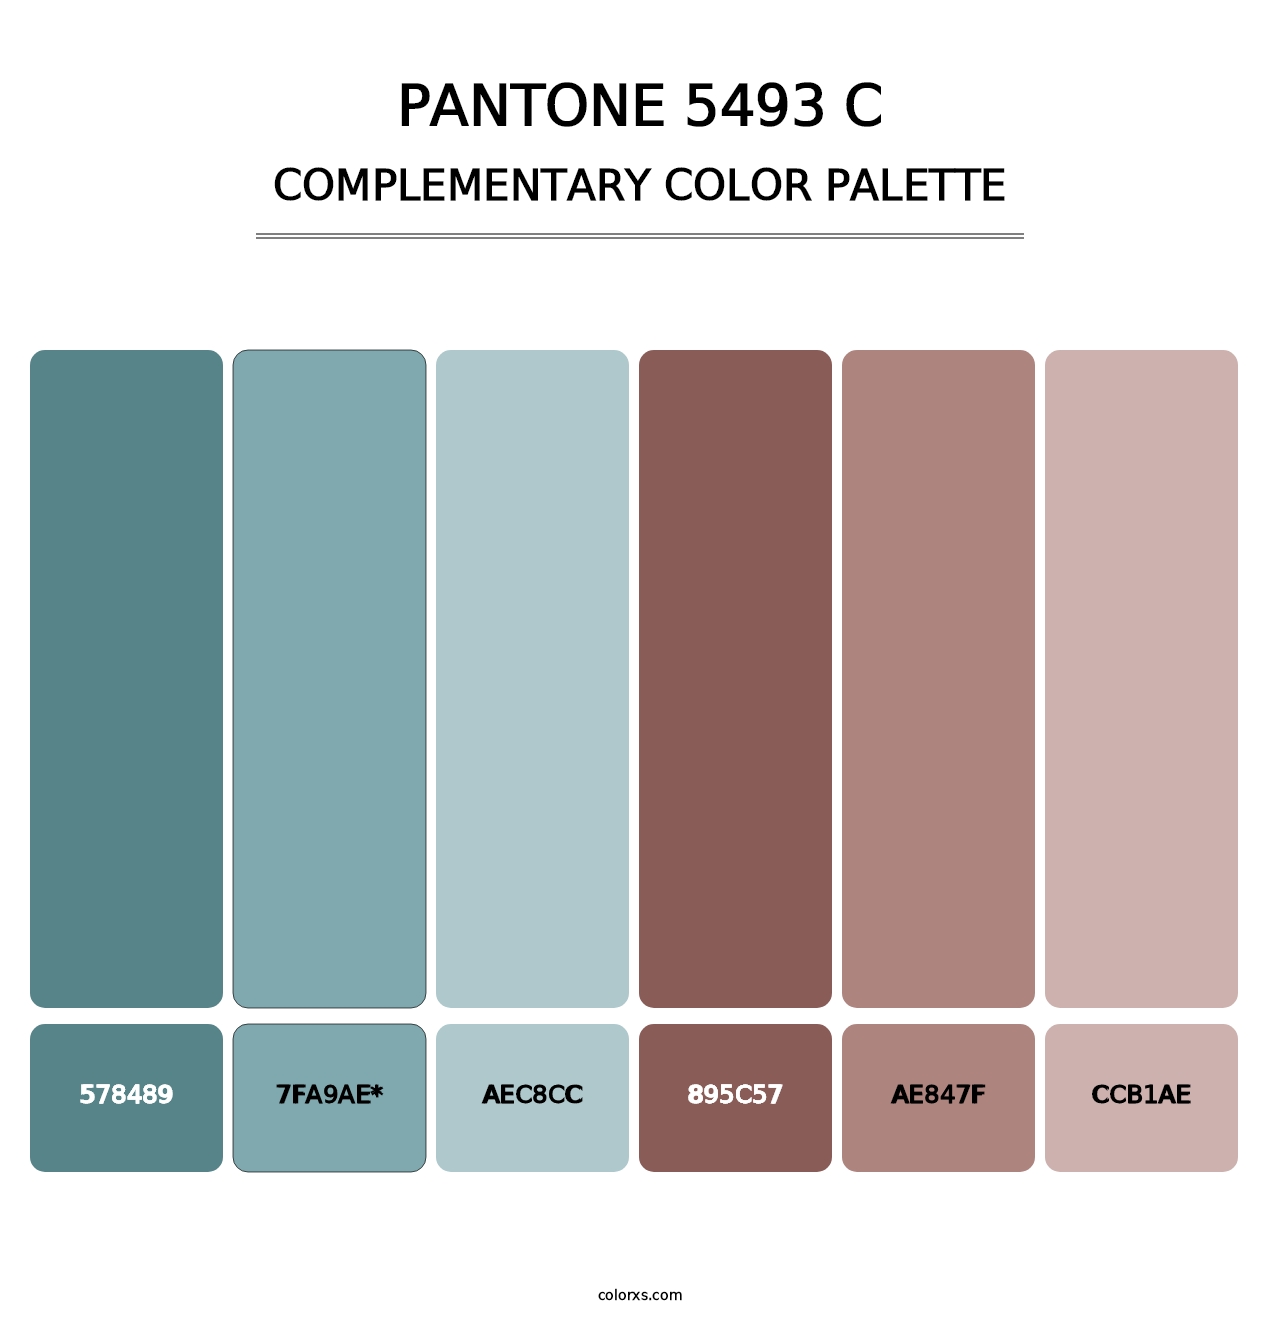 PANTONE 5493 C - Complementary Color Palette